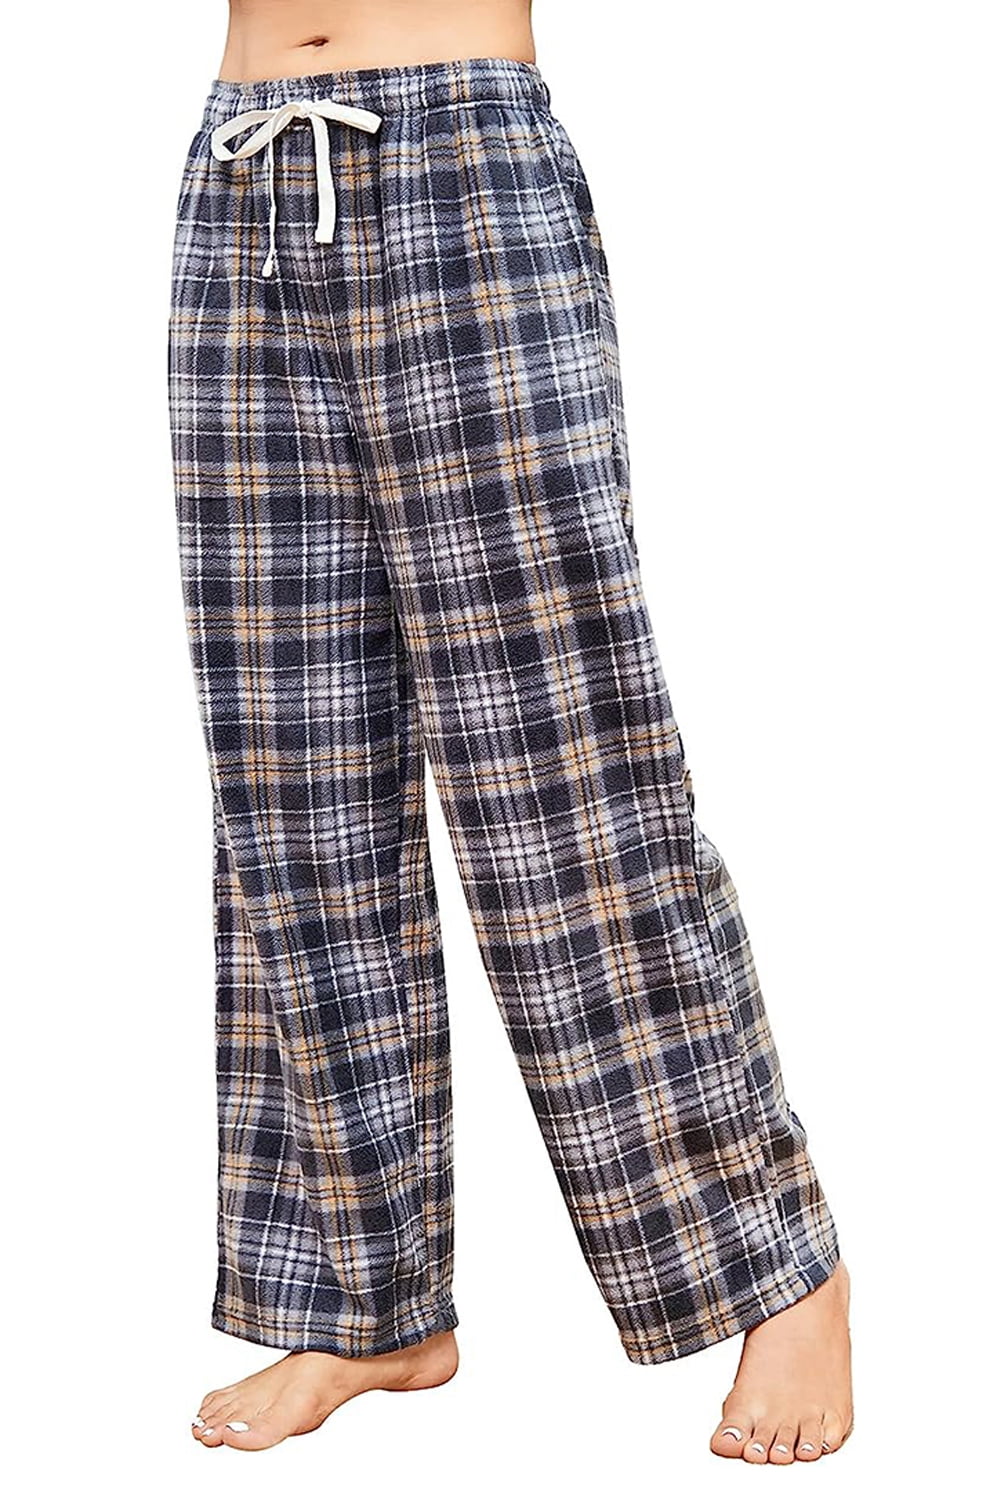 U2SKIIN Women Fleece Pajama Pants, Comfy Plaid PJ Bottoms For Women with  Pockets Soft Warm（Grey-yellow Plaid, Large）